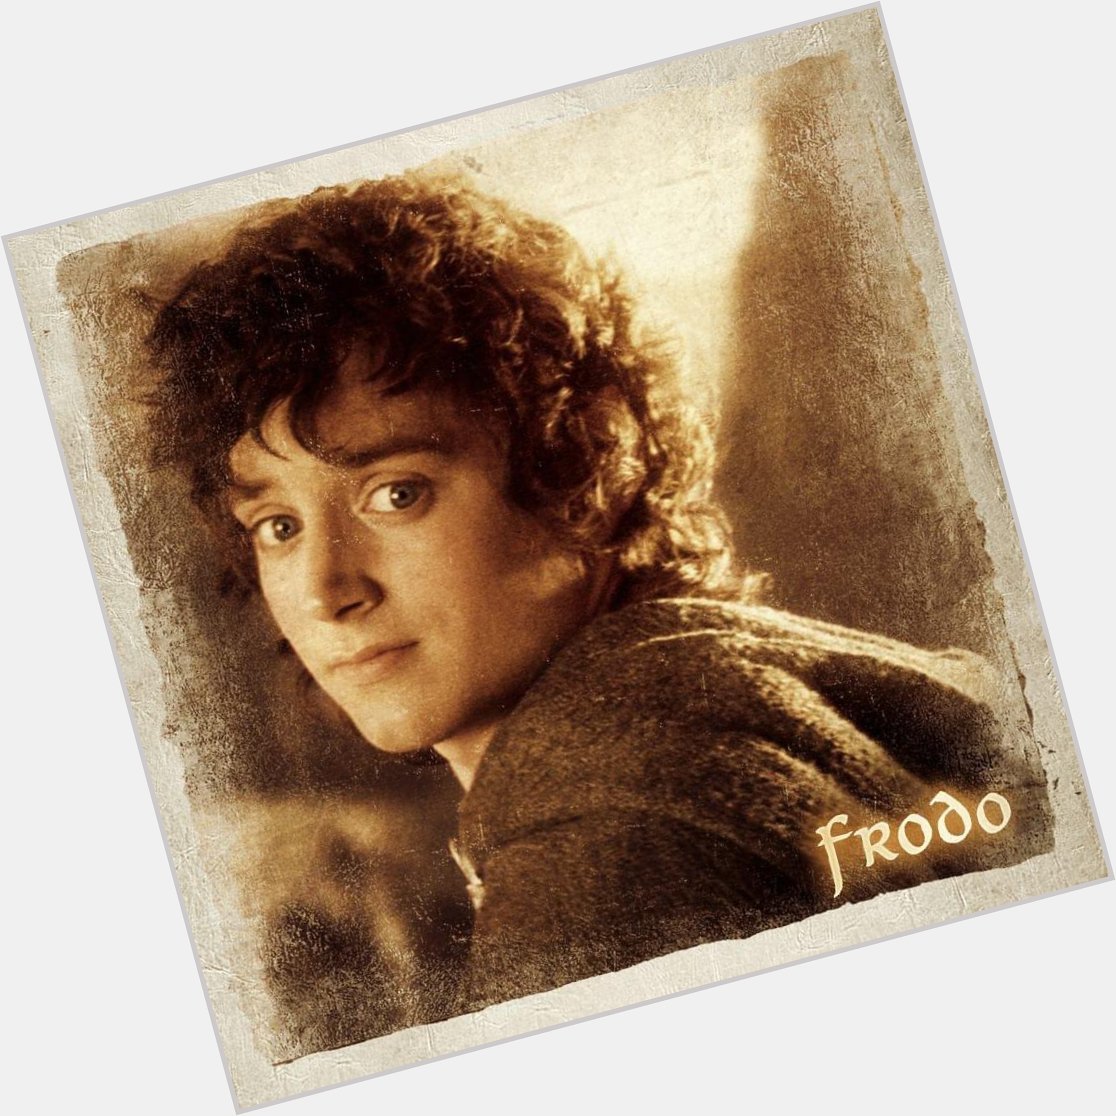 Happy Birthday to our dear Frodo, Elijah Wood! 